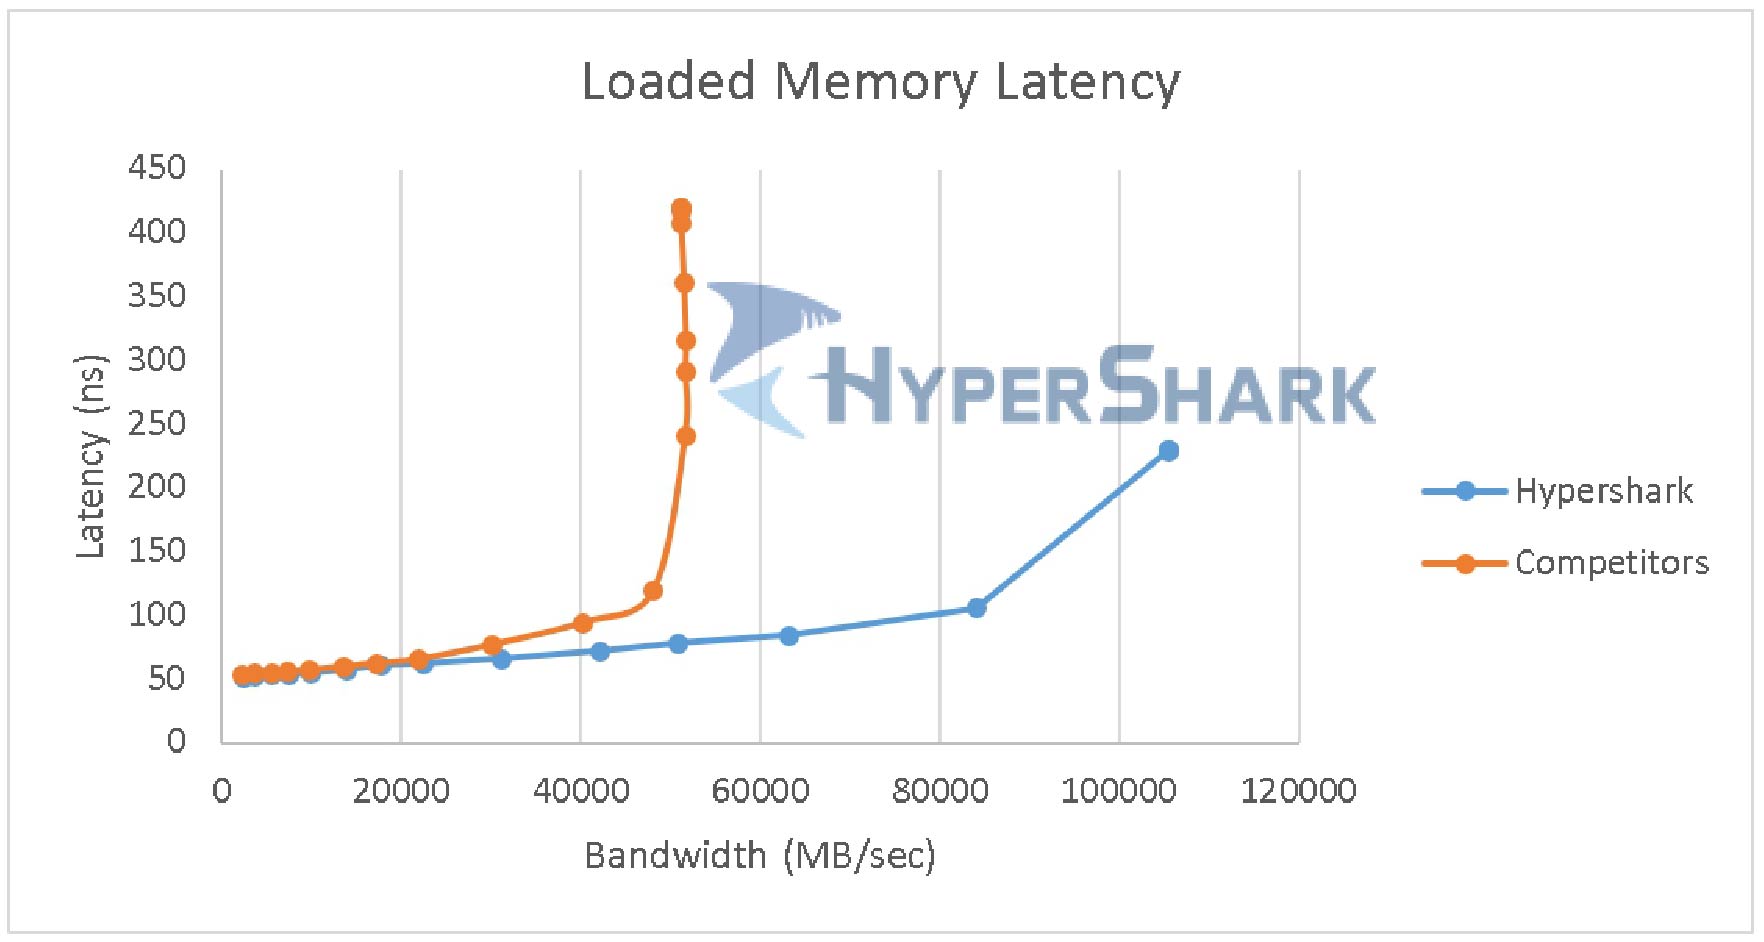 Figure 1. Loaded memory latency: HyperShark vs. Normal